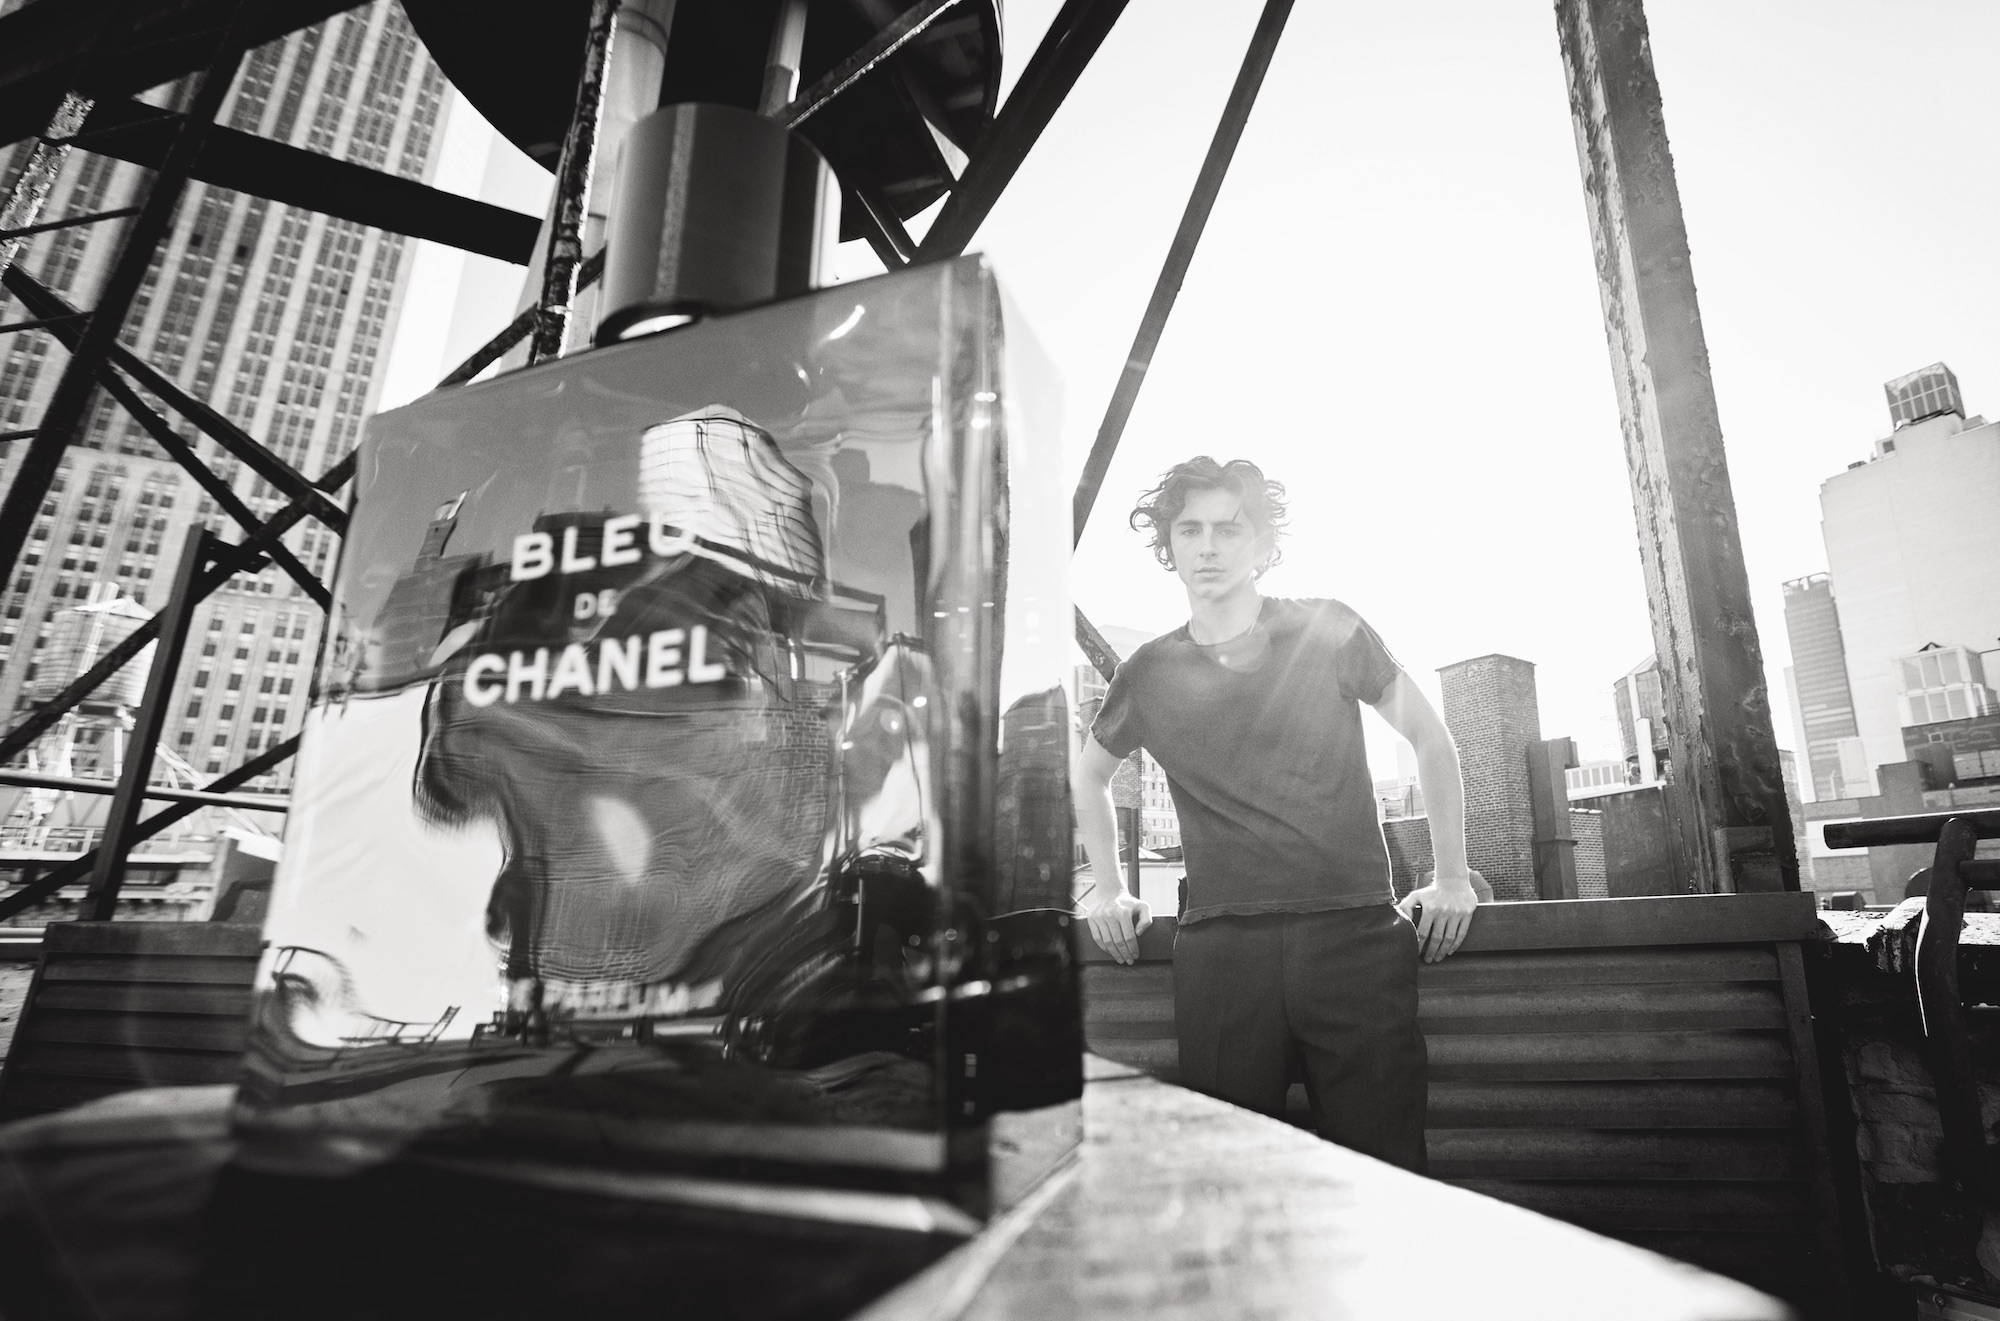 Timothée Chalamet embodies Bleu de Chanel - ALL-I-C